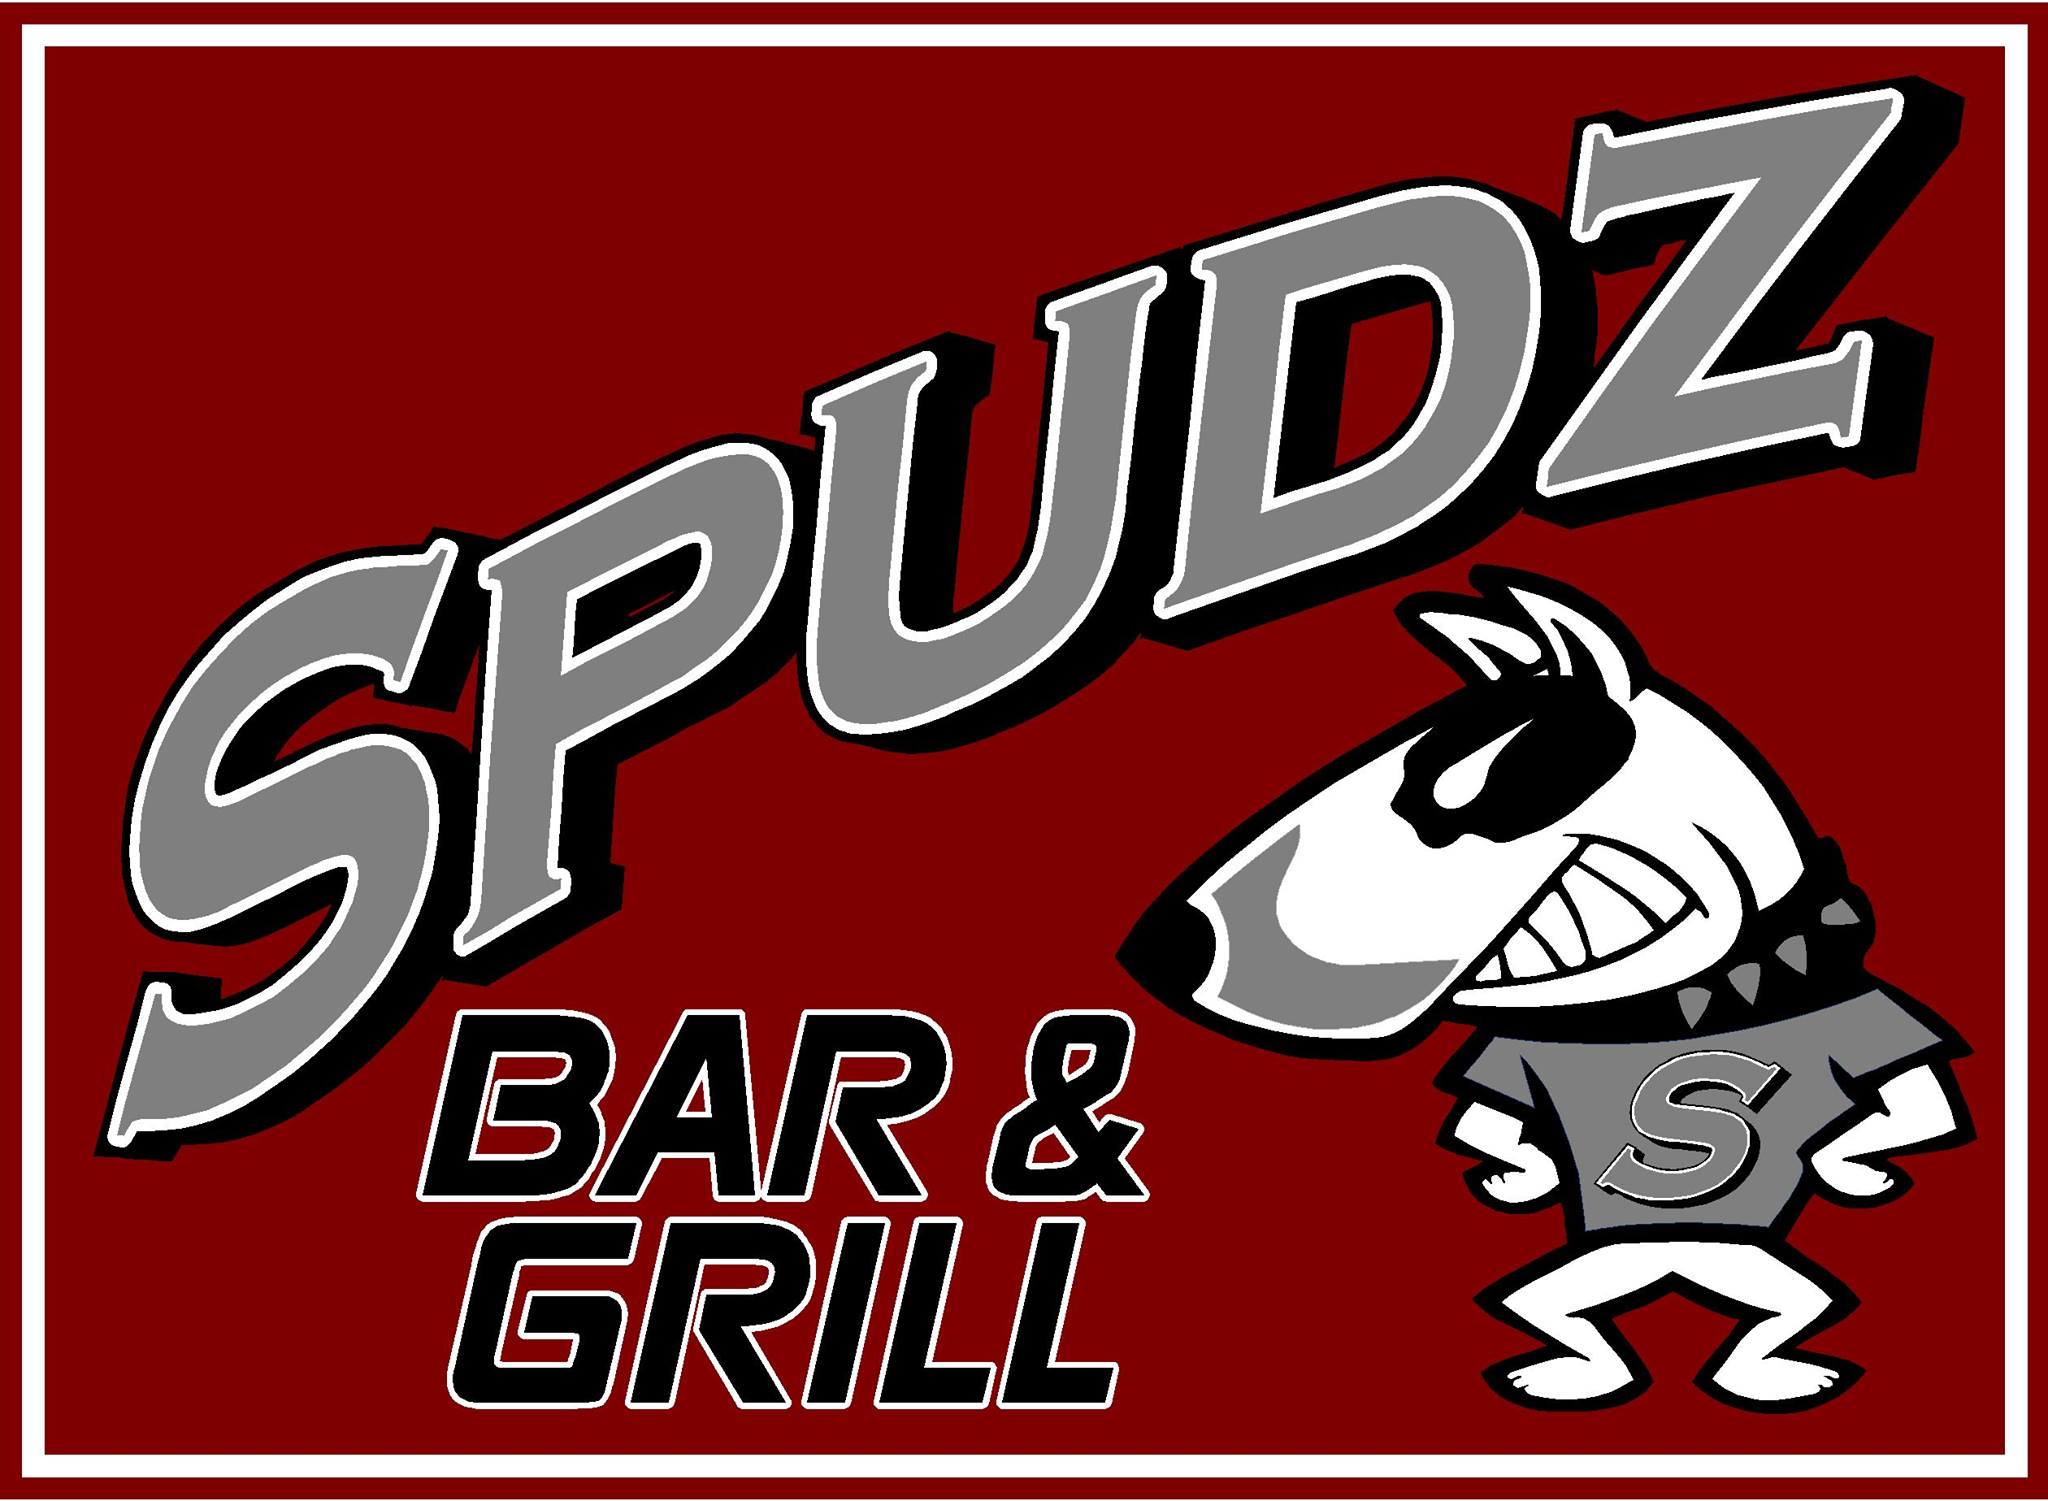 Spudz Bar & Grill